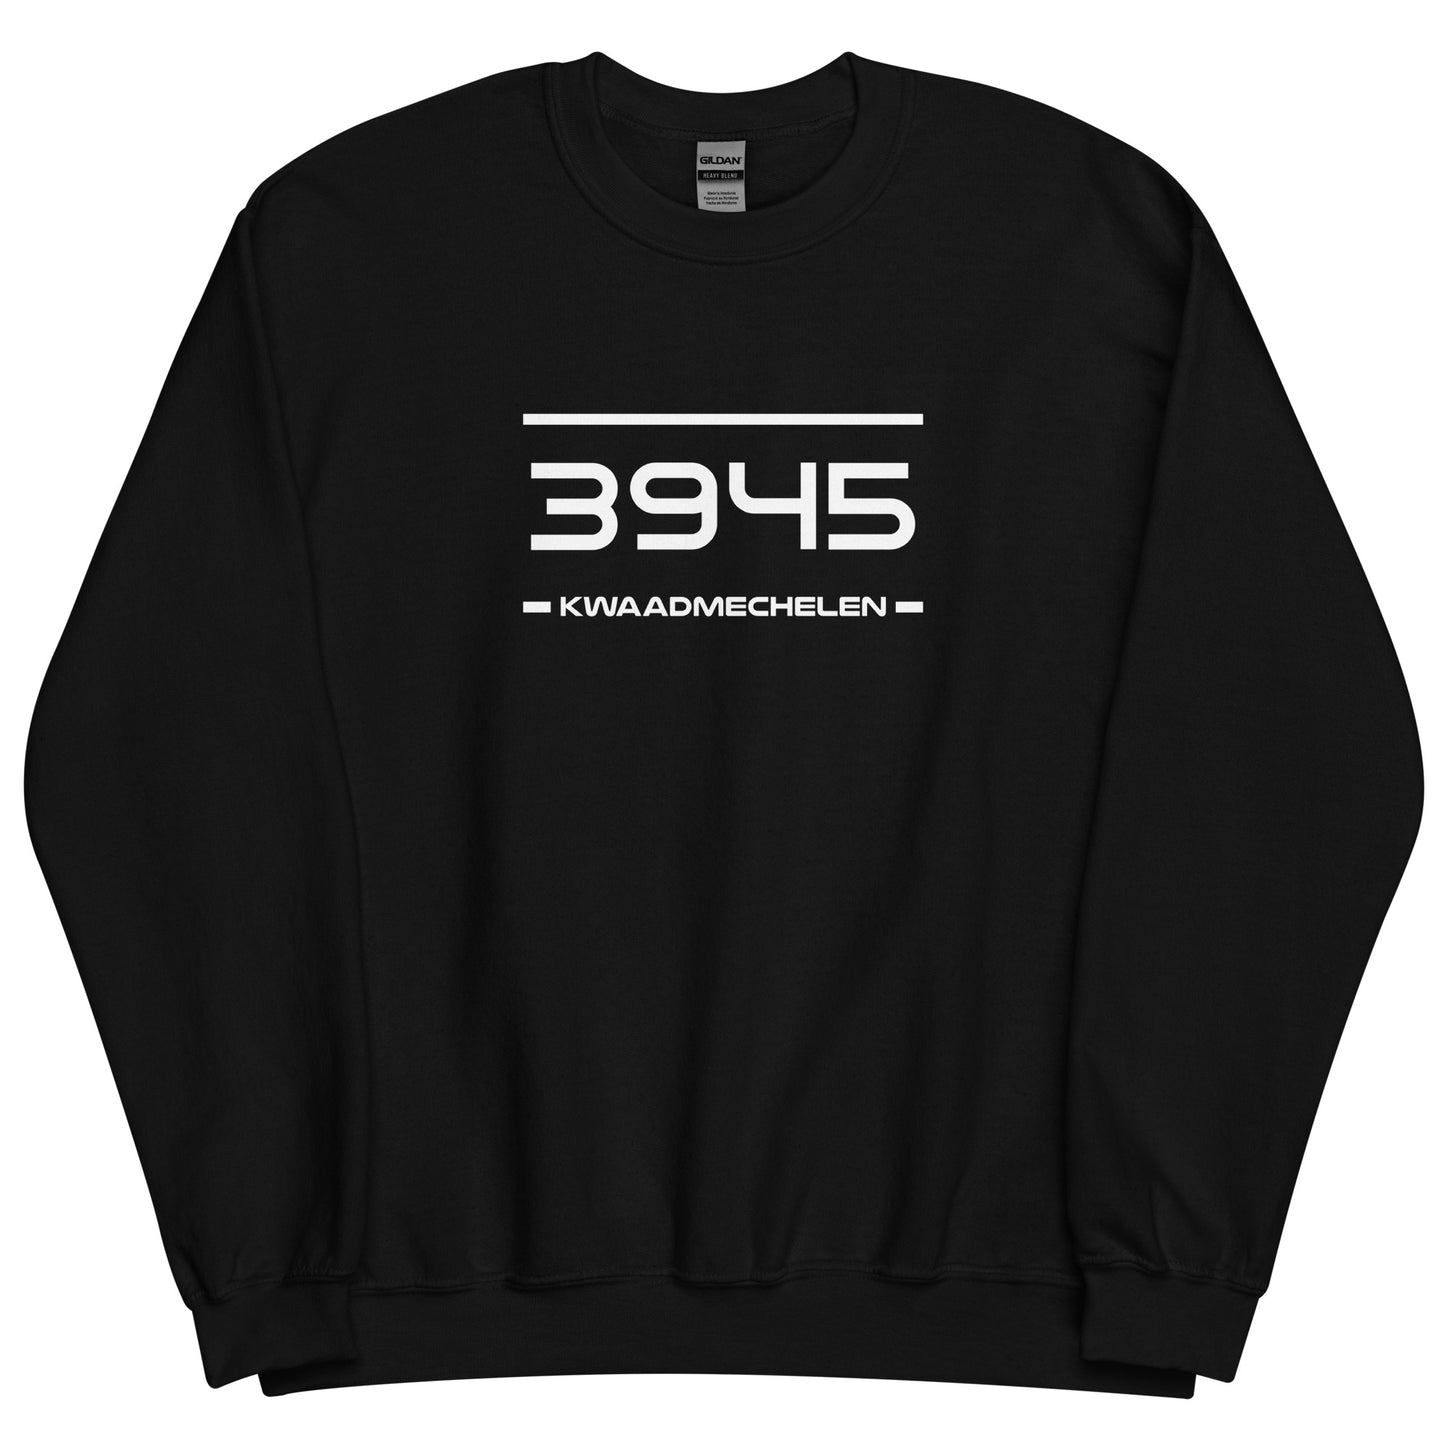 Sweater - 3945 - Kwaadmechelen (M/V)